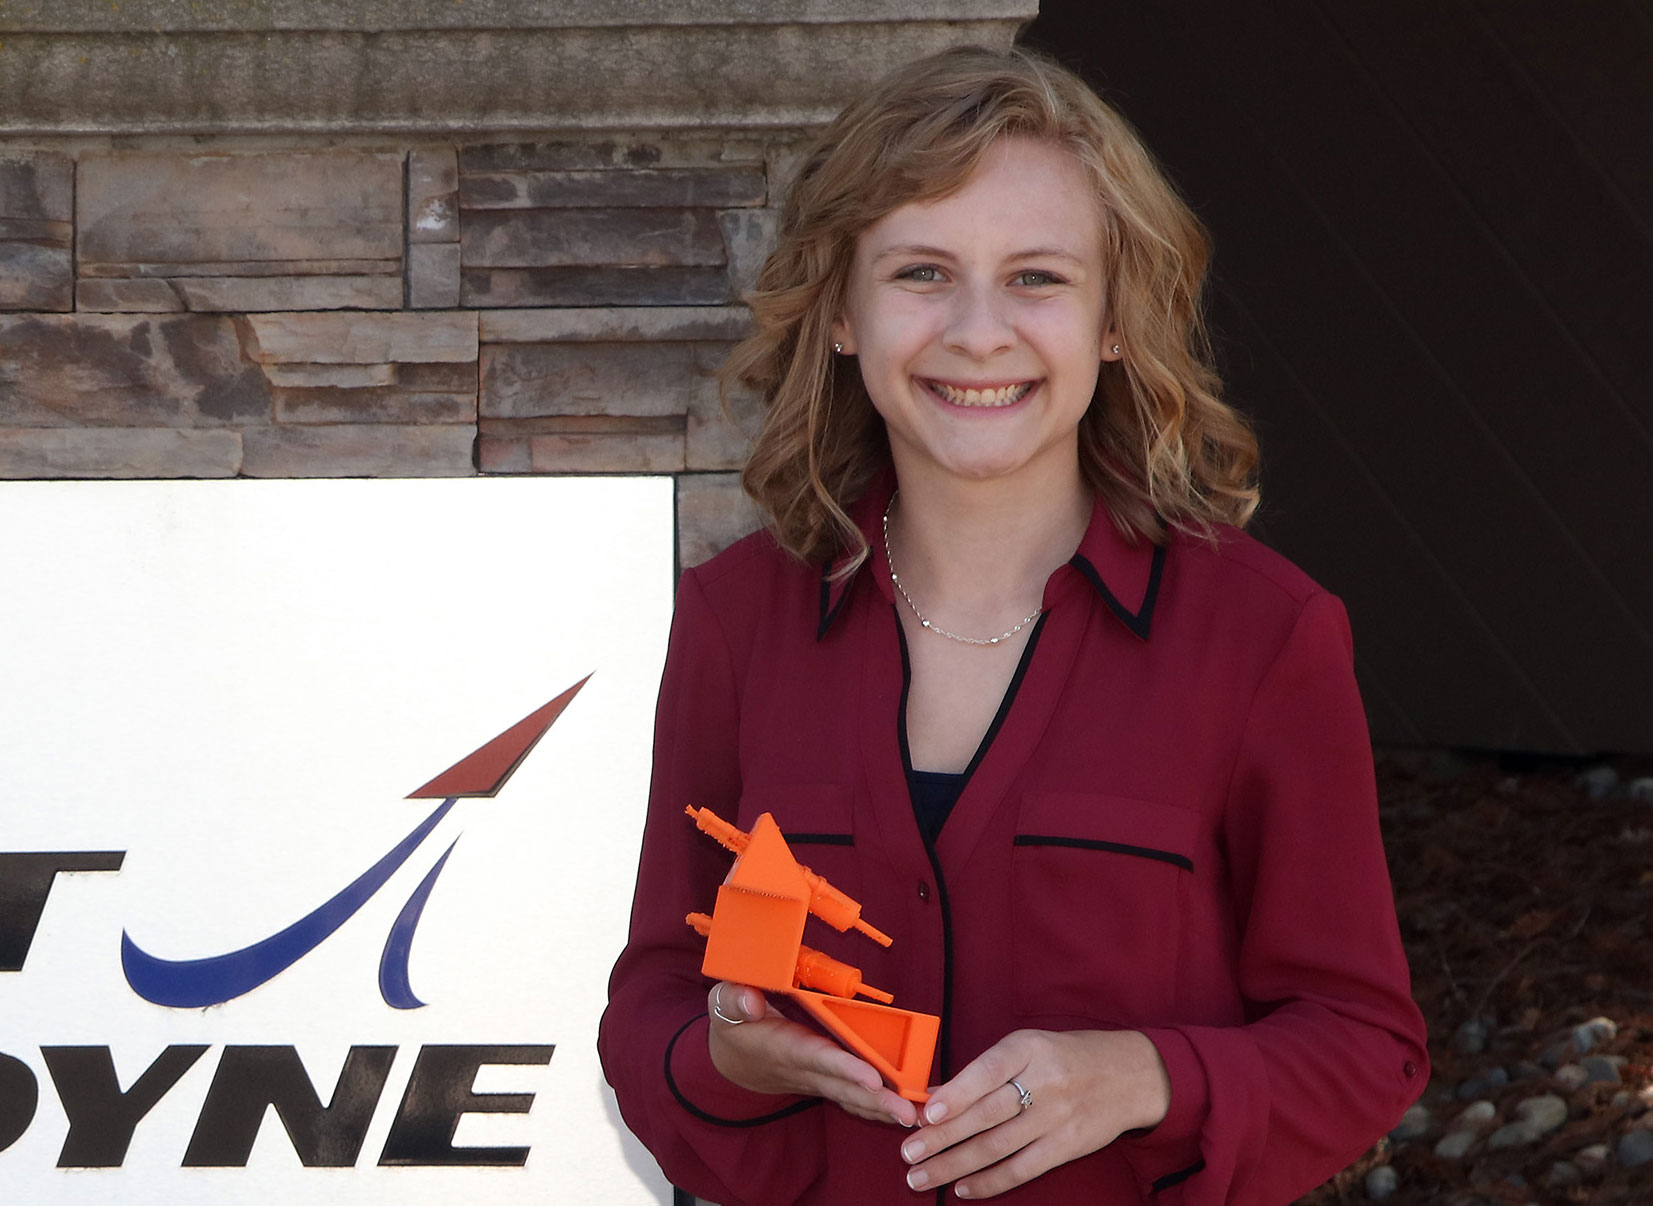 A photo of Sac State student Elizabeth Gabler holding a model of the bracket she designed for Aerojet Rockeydyne